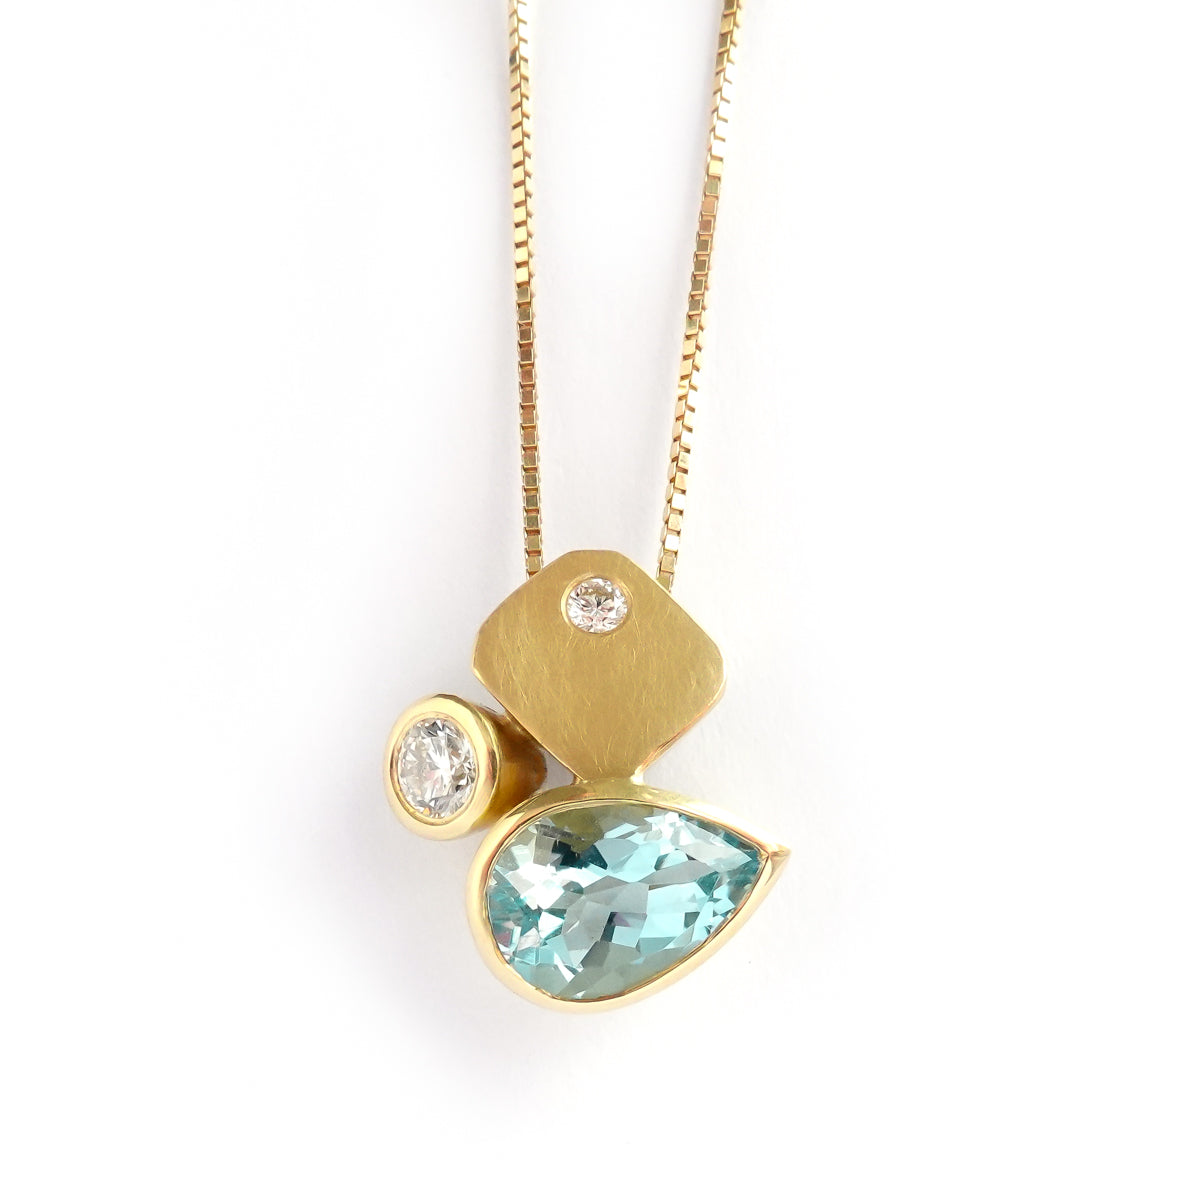 Contemporary modern unique 18ct gold diamond necklace aquamarine handmade by sue lane